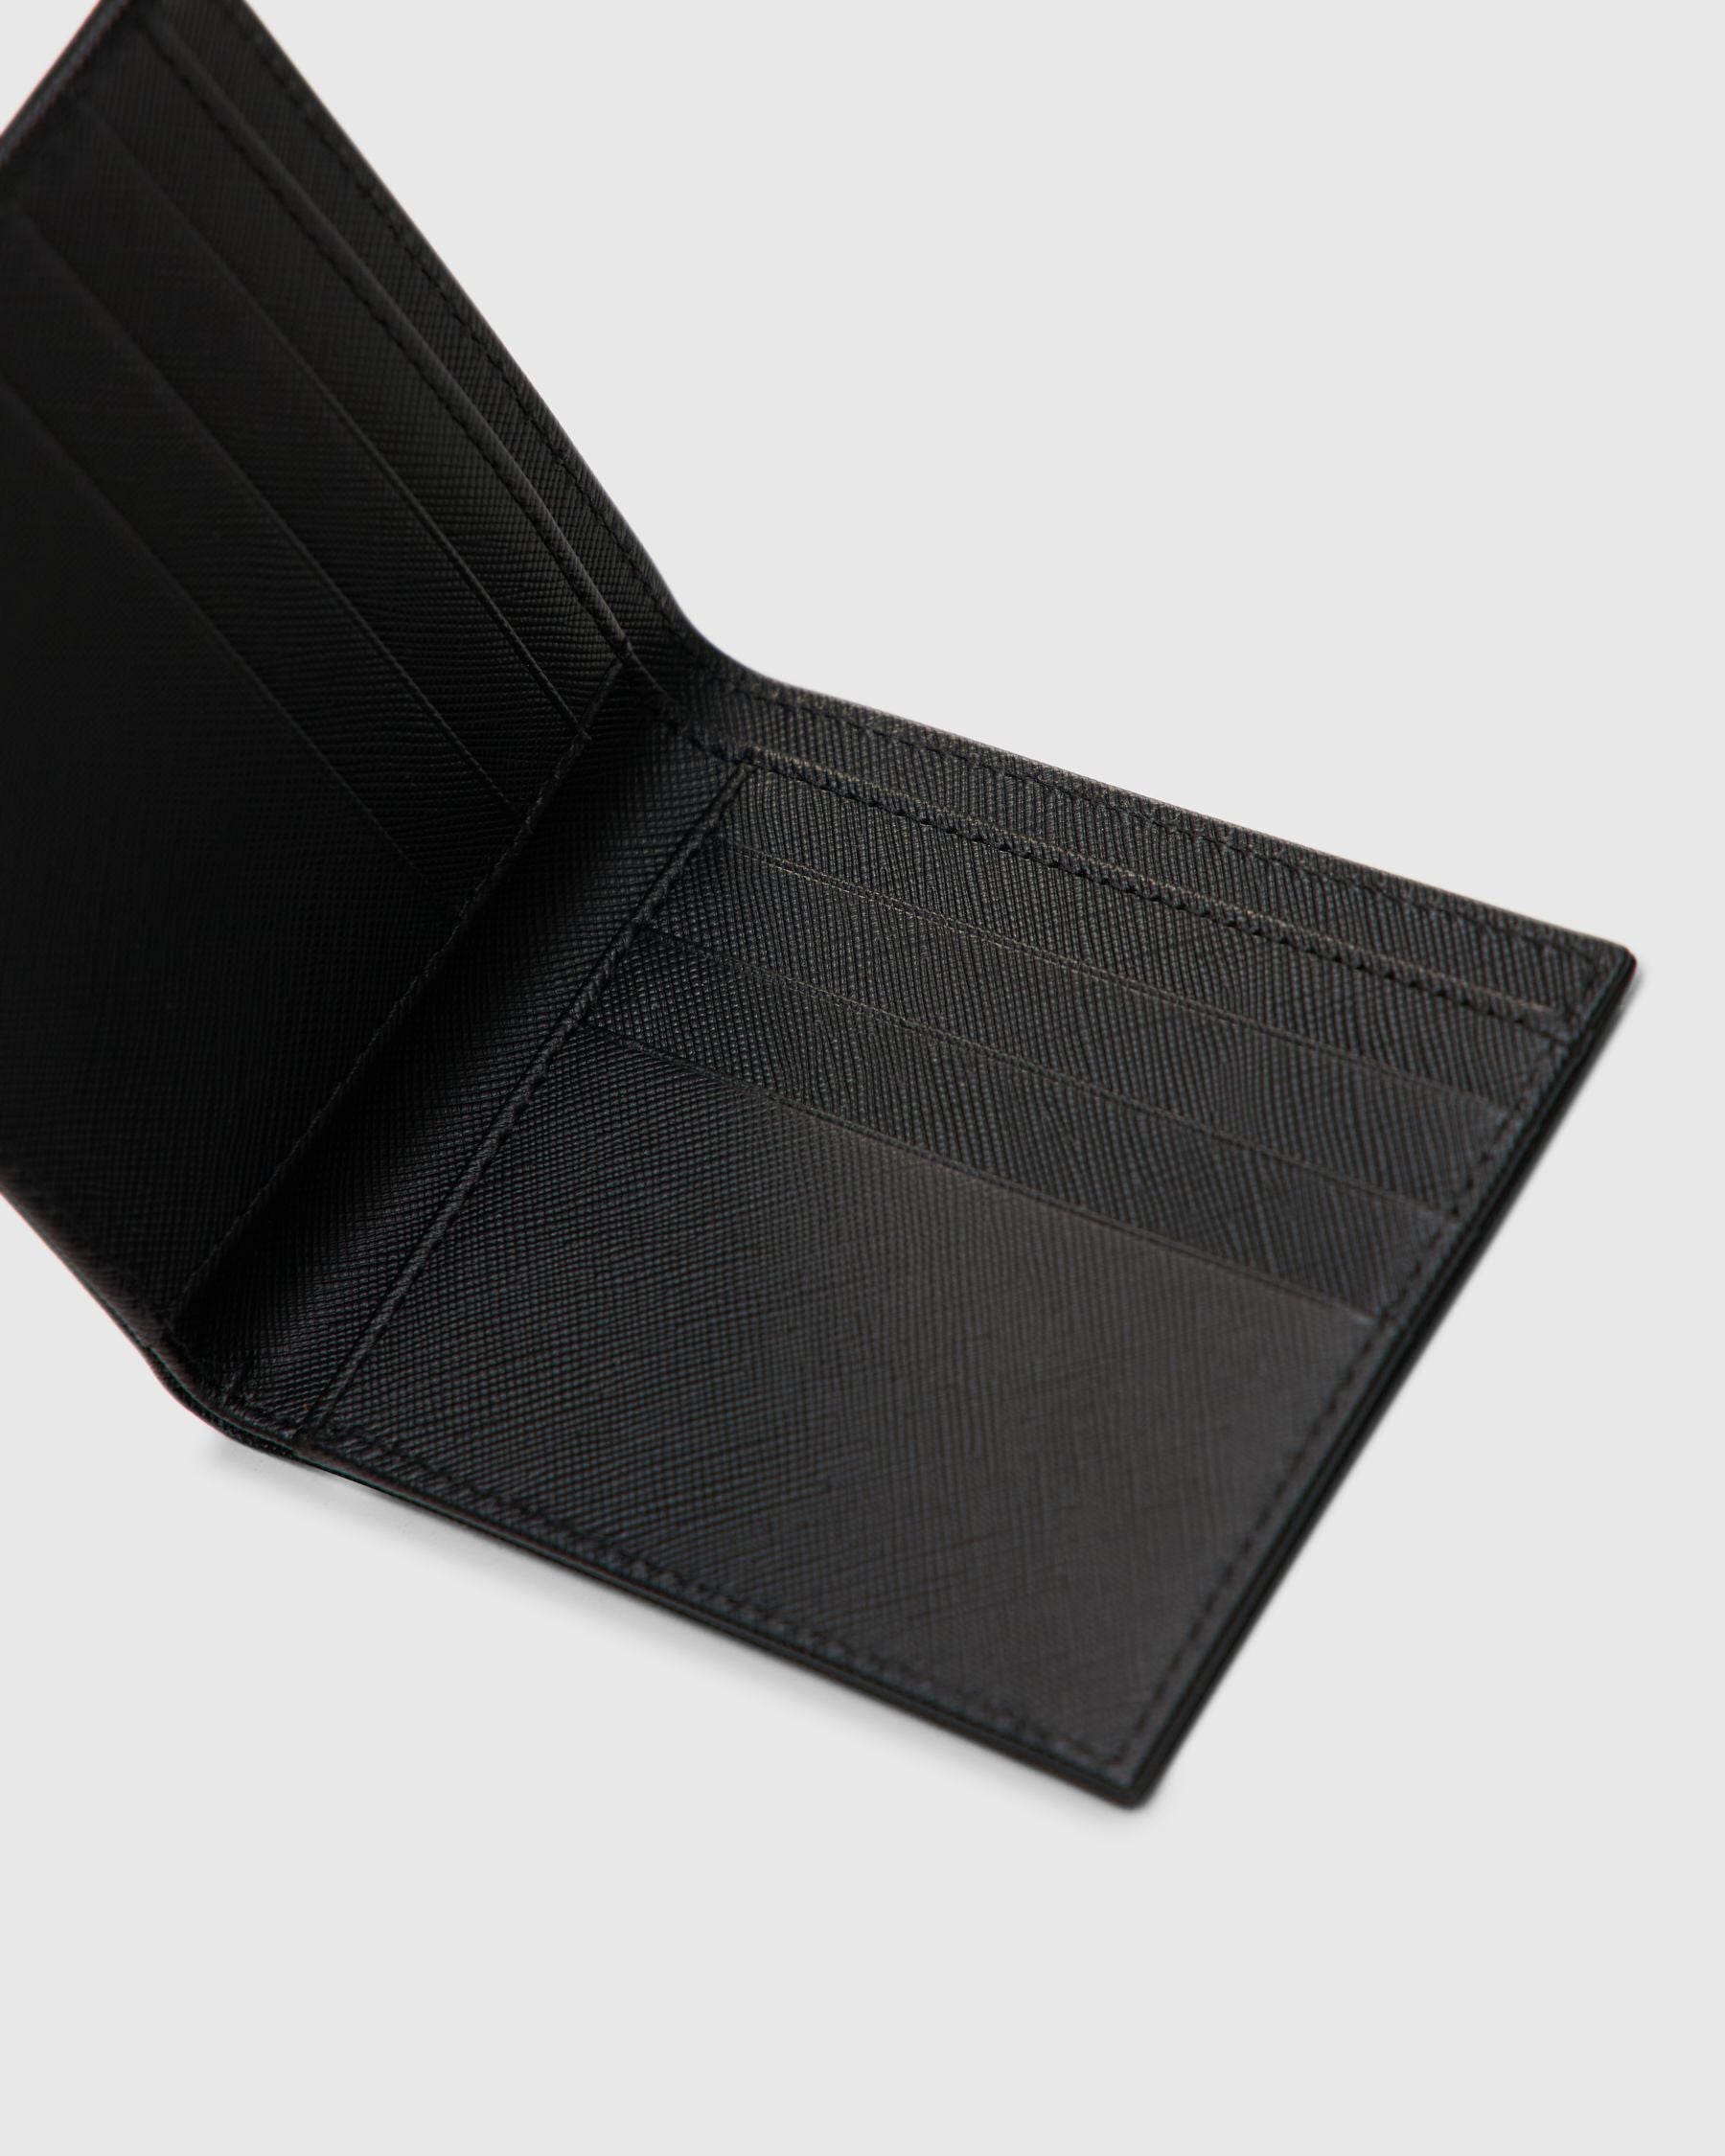 Aly Wallet in Black